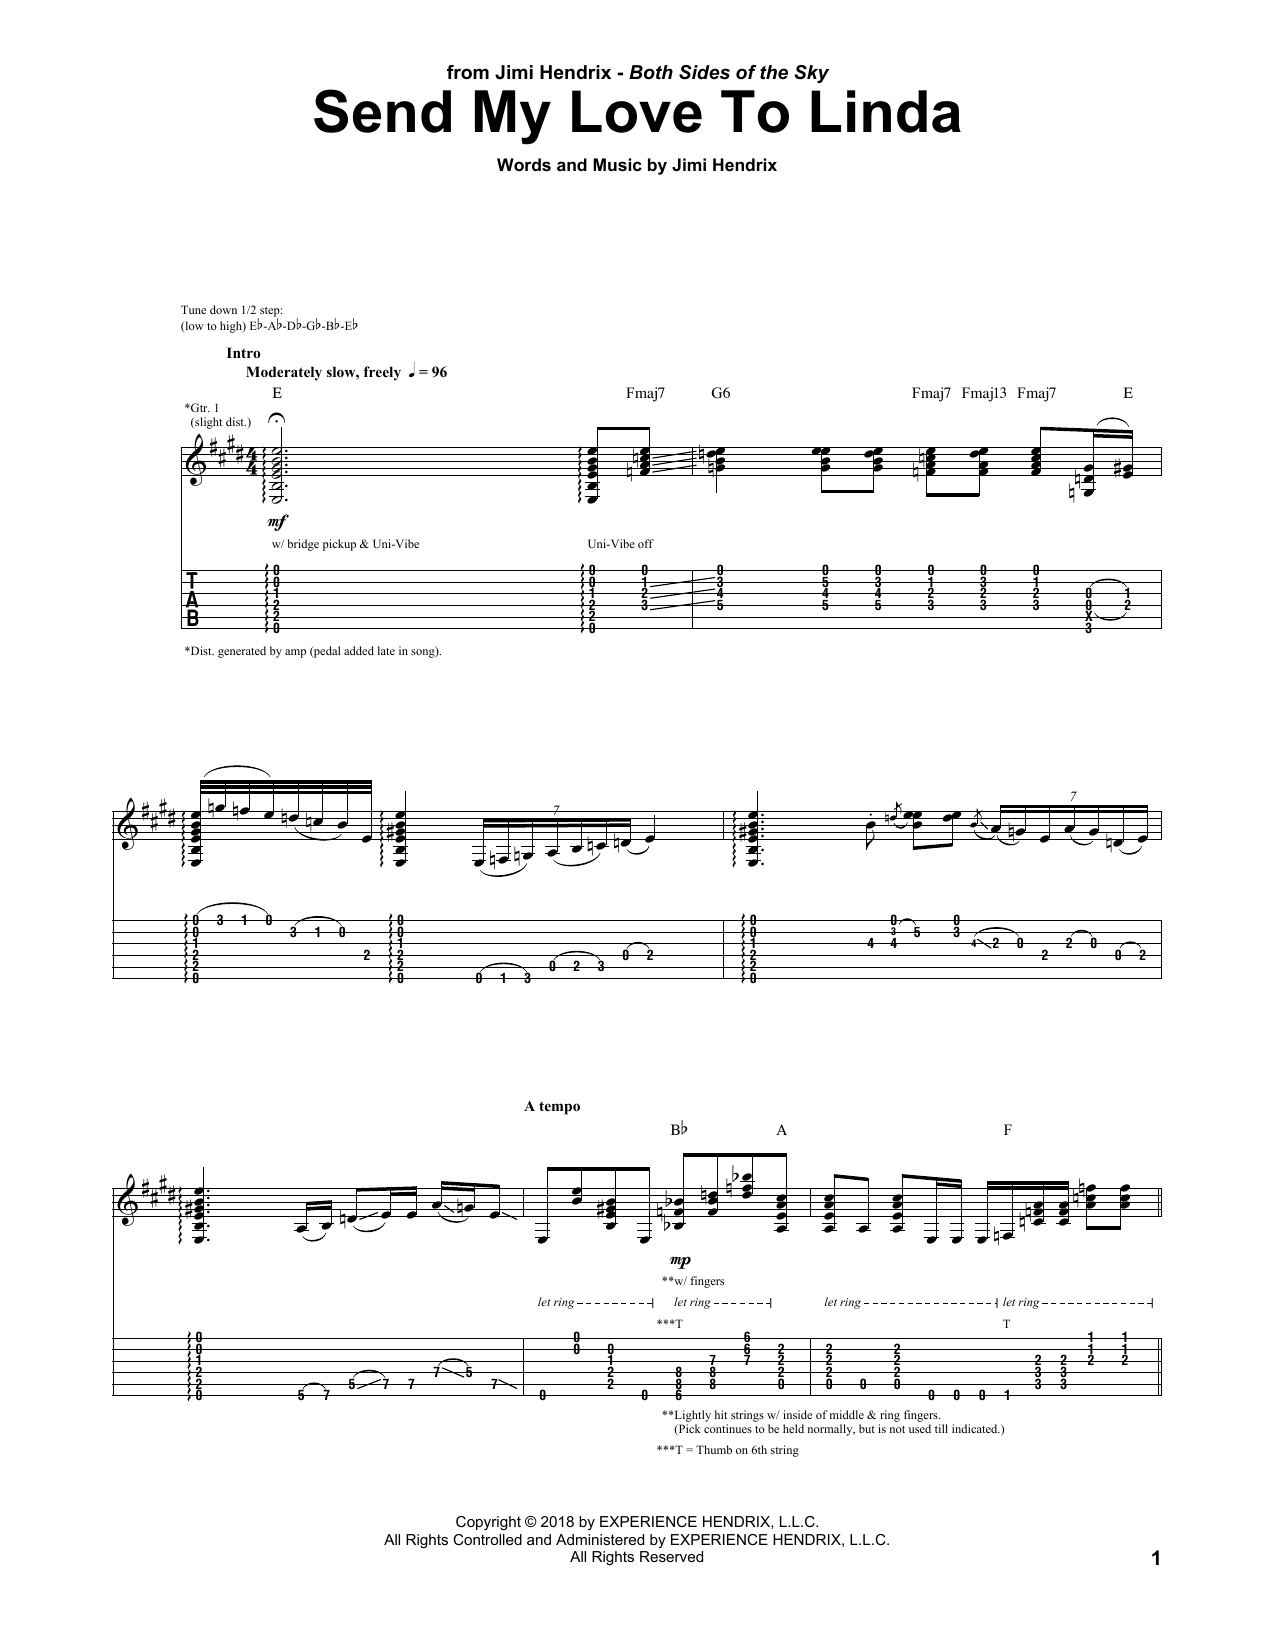 Jimi Hendrix Send My Love To Linda Sheet Music Notes & Chords for Guitar Tab - Download or Print PDF